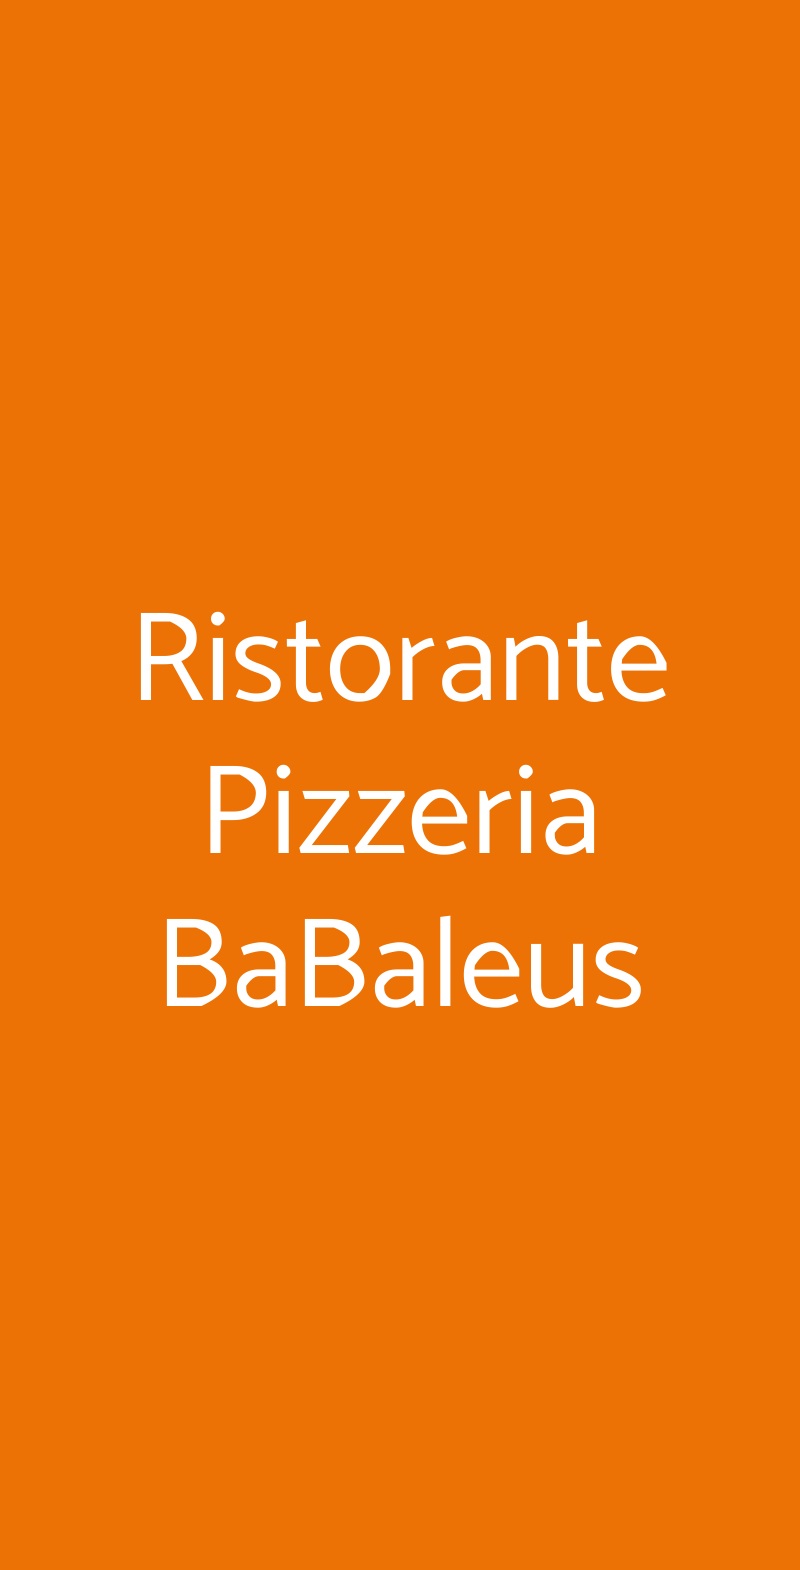 Ristorante Pizzeria BaBaleus Ravenna menù 1 pagina